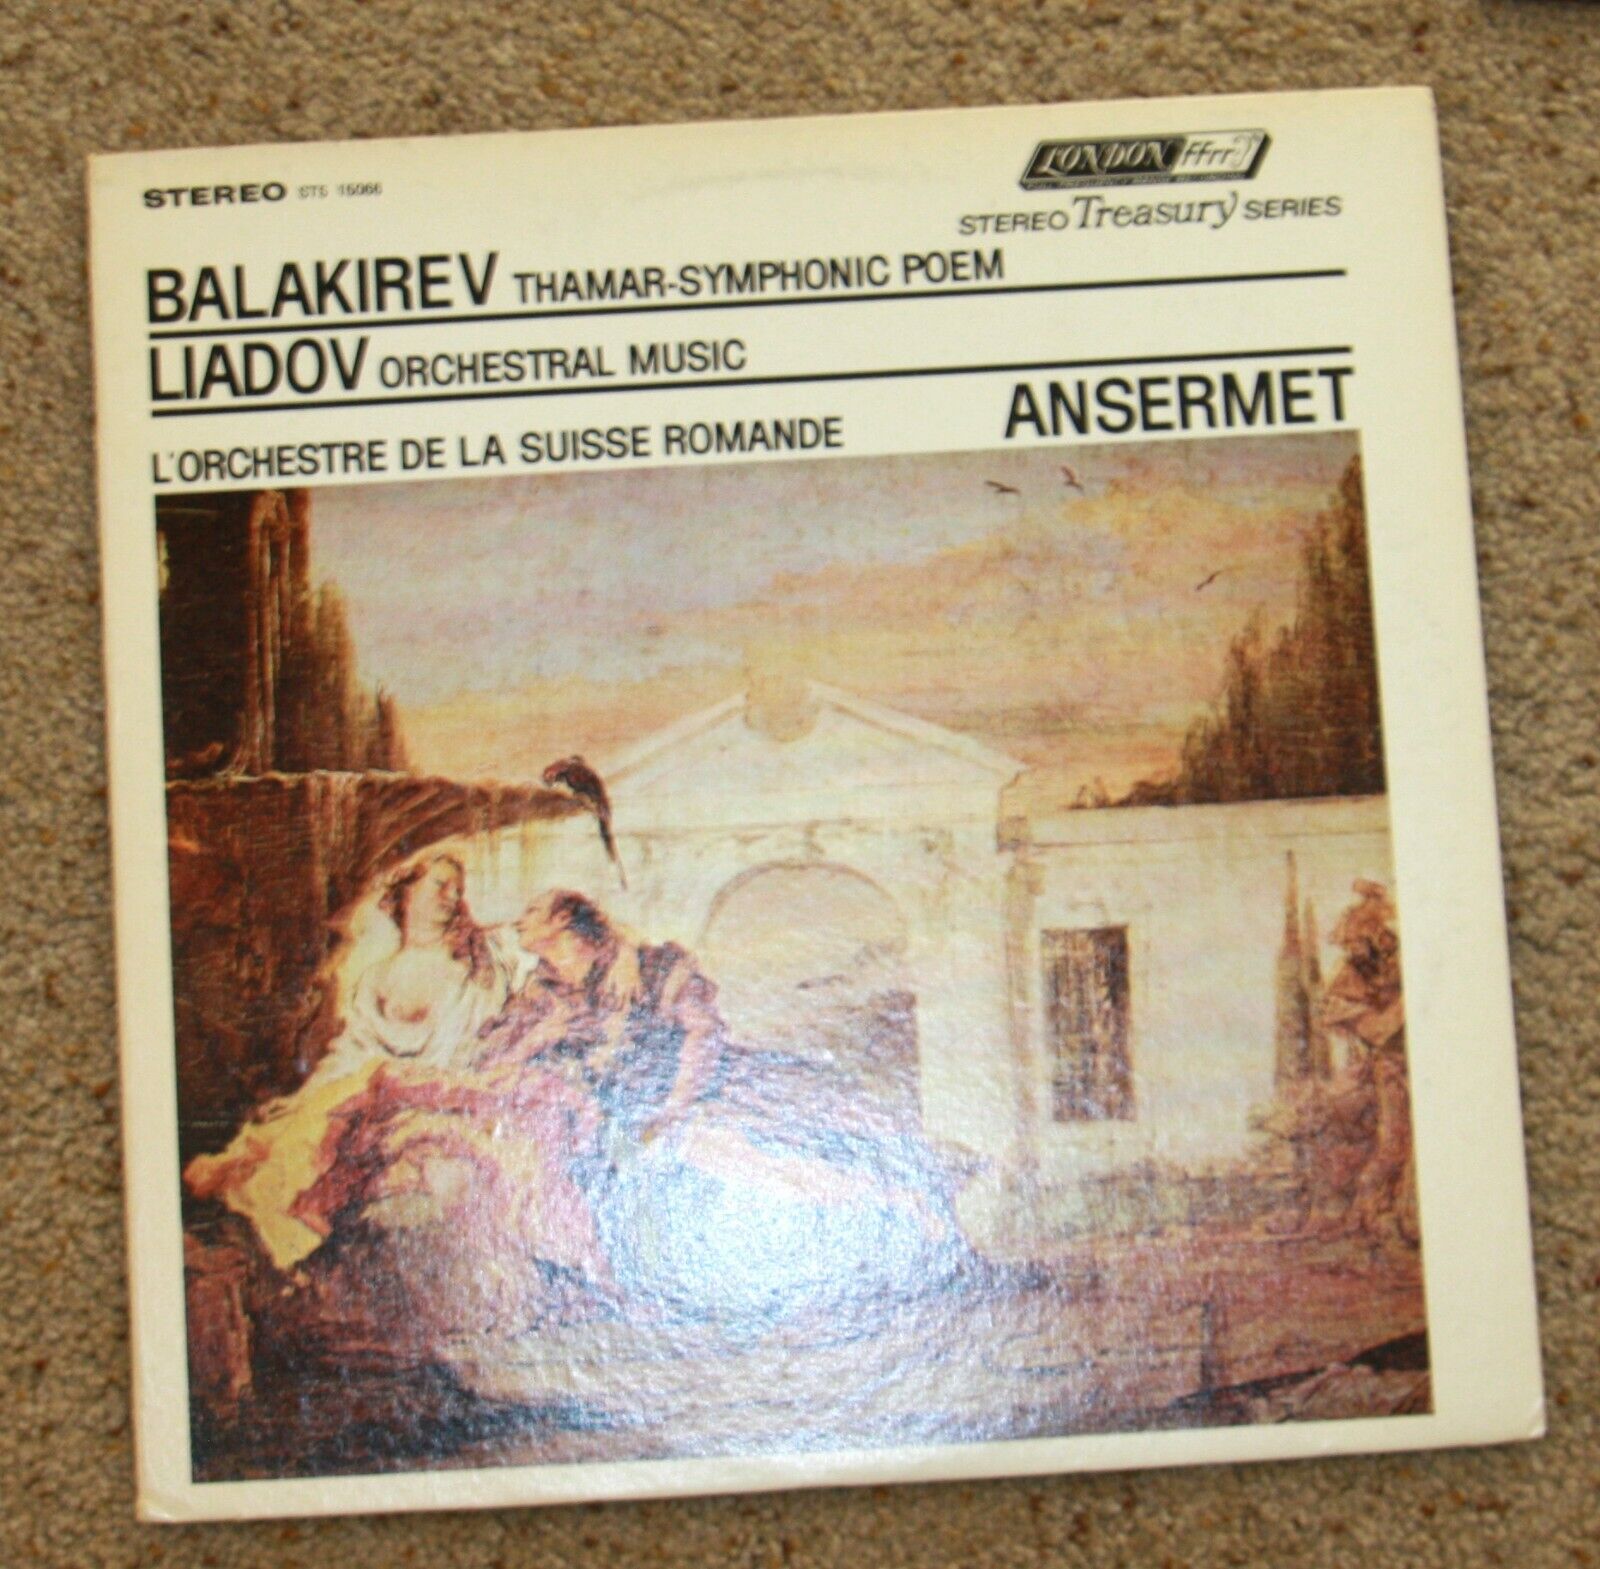 Balakirev Liadov Thamar-Symphonic Poem Suisse Romande  LP vintage vinyl record 